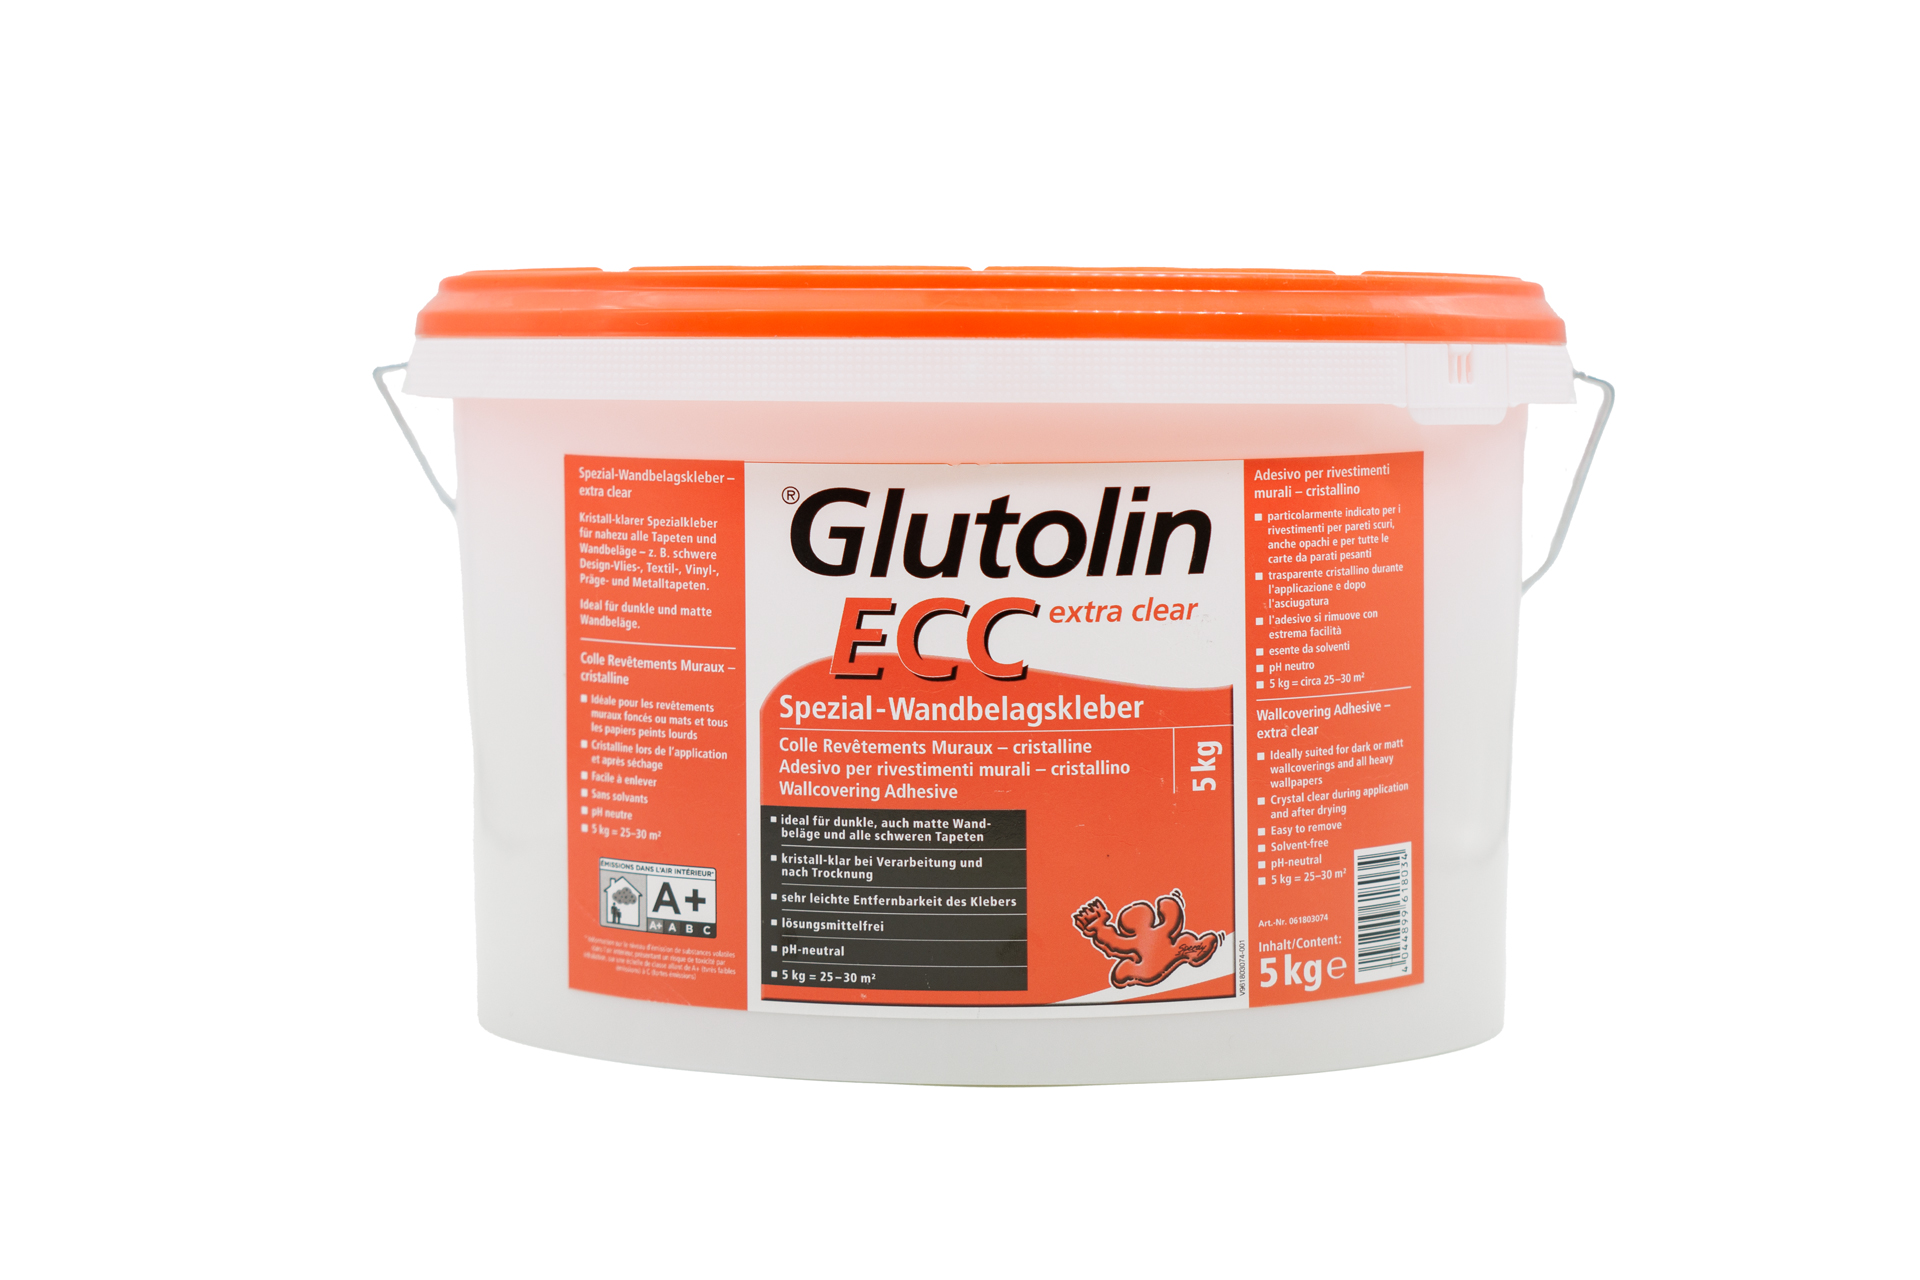 Glutolin Spezial-Wandbelagskleber, 5kg